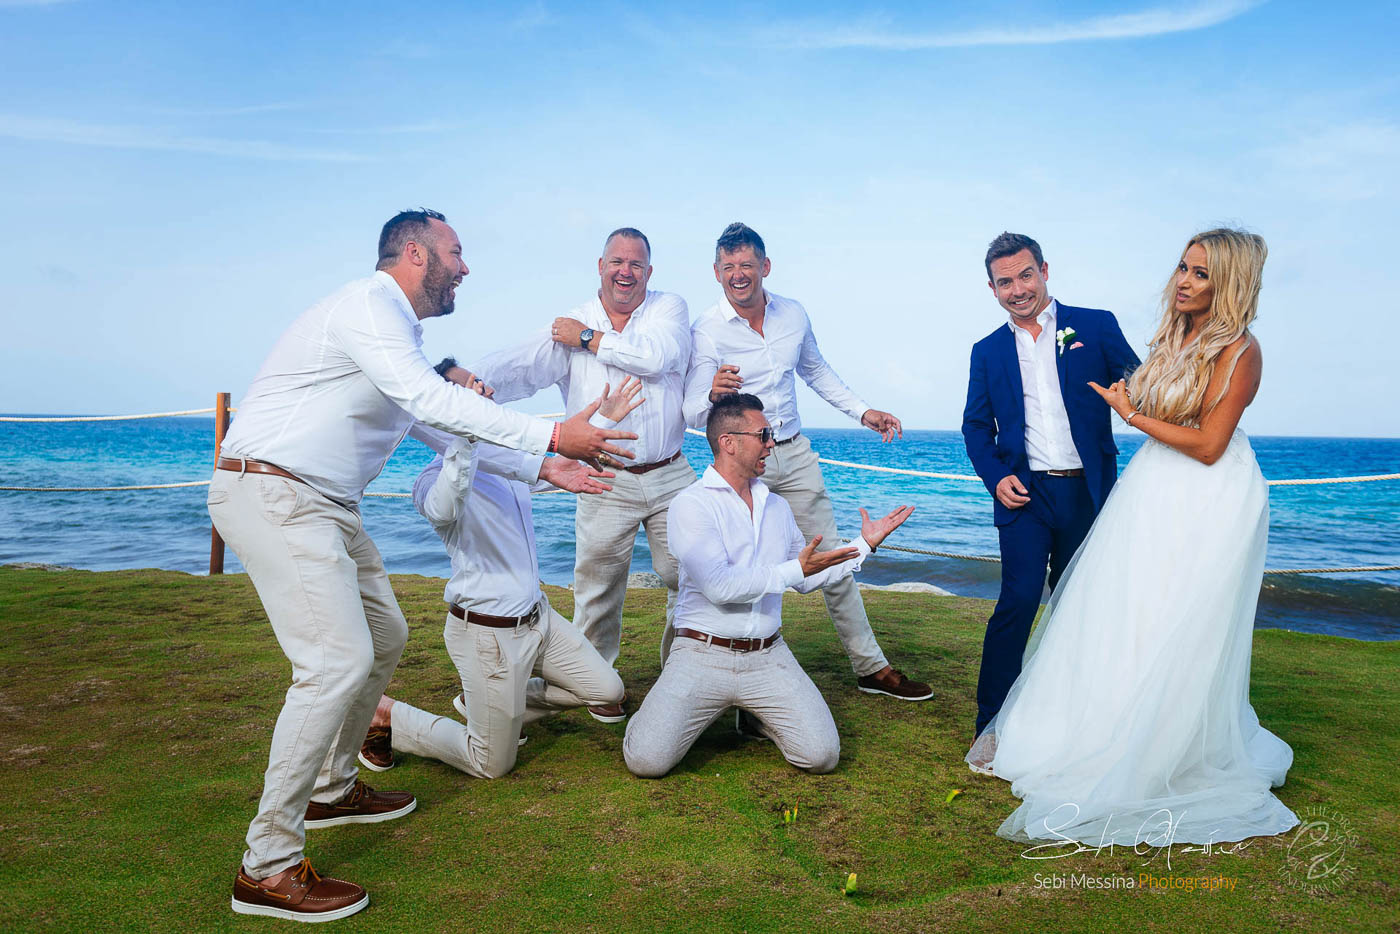 Groomsmen kidding at a destination wedding in Cancun Mexico – Sebi Messina Photography